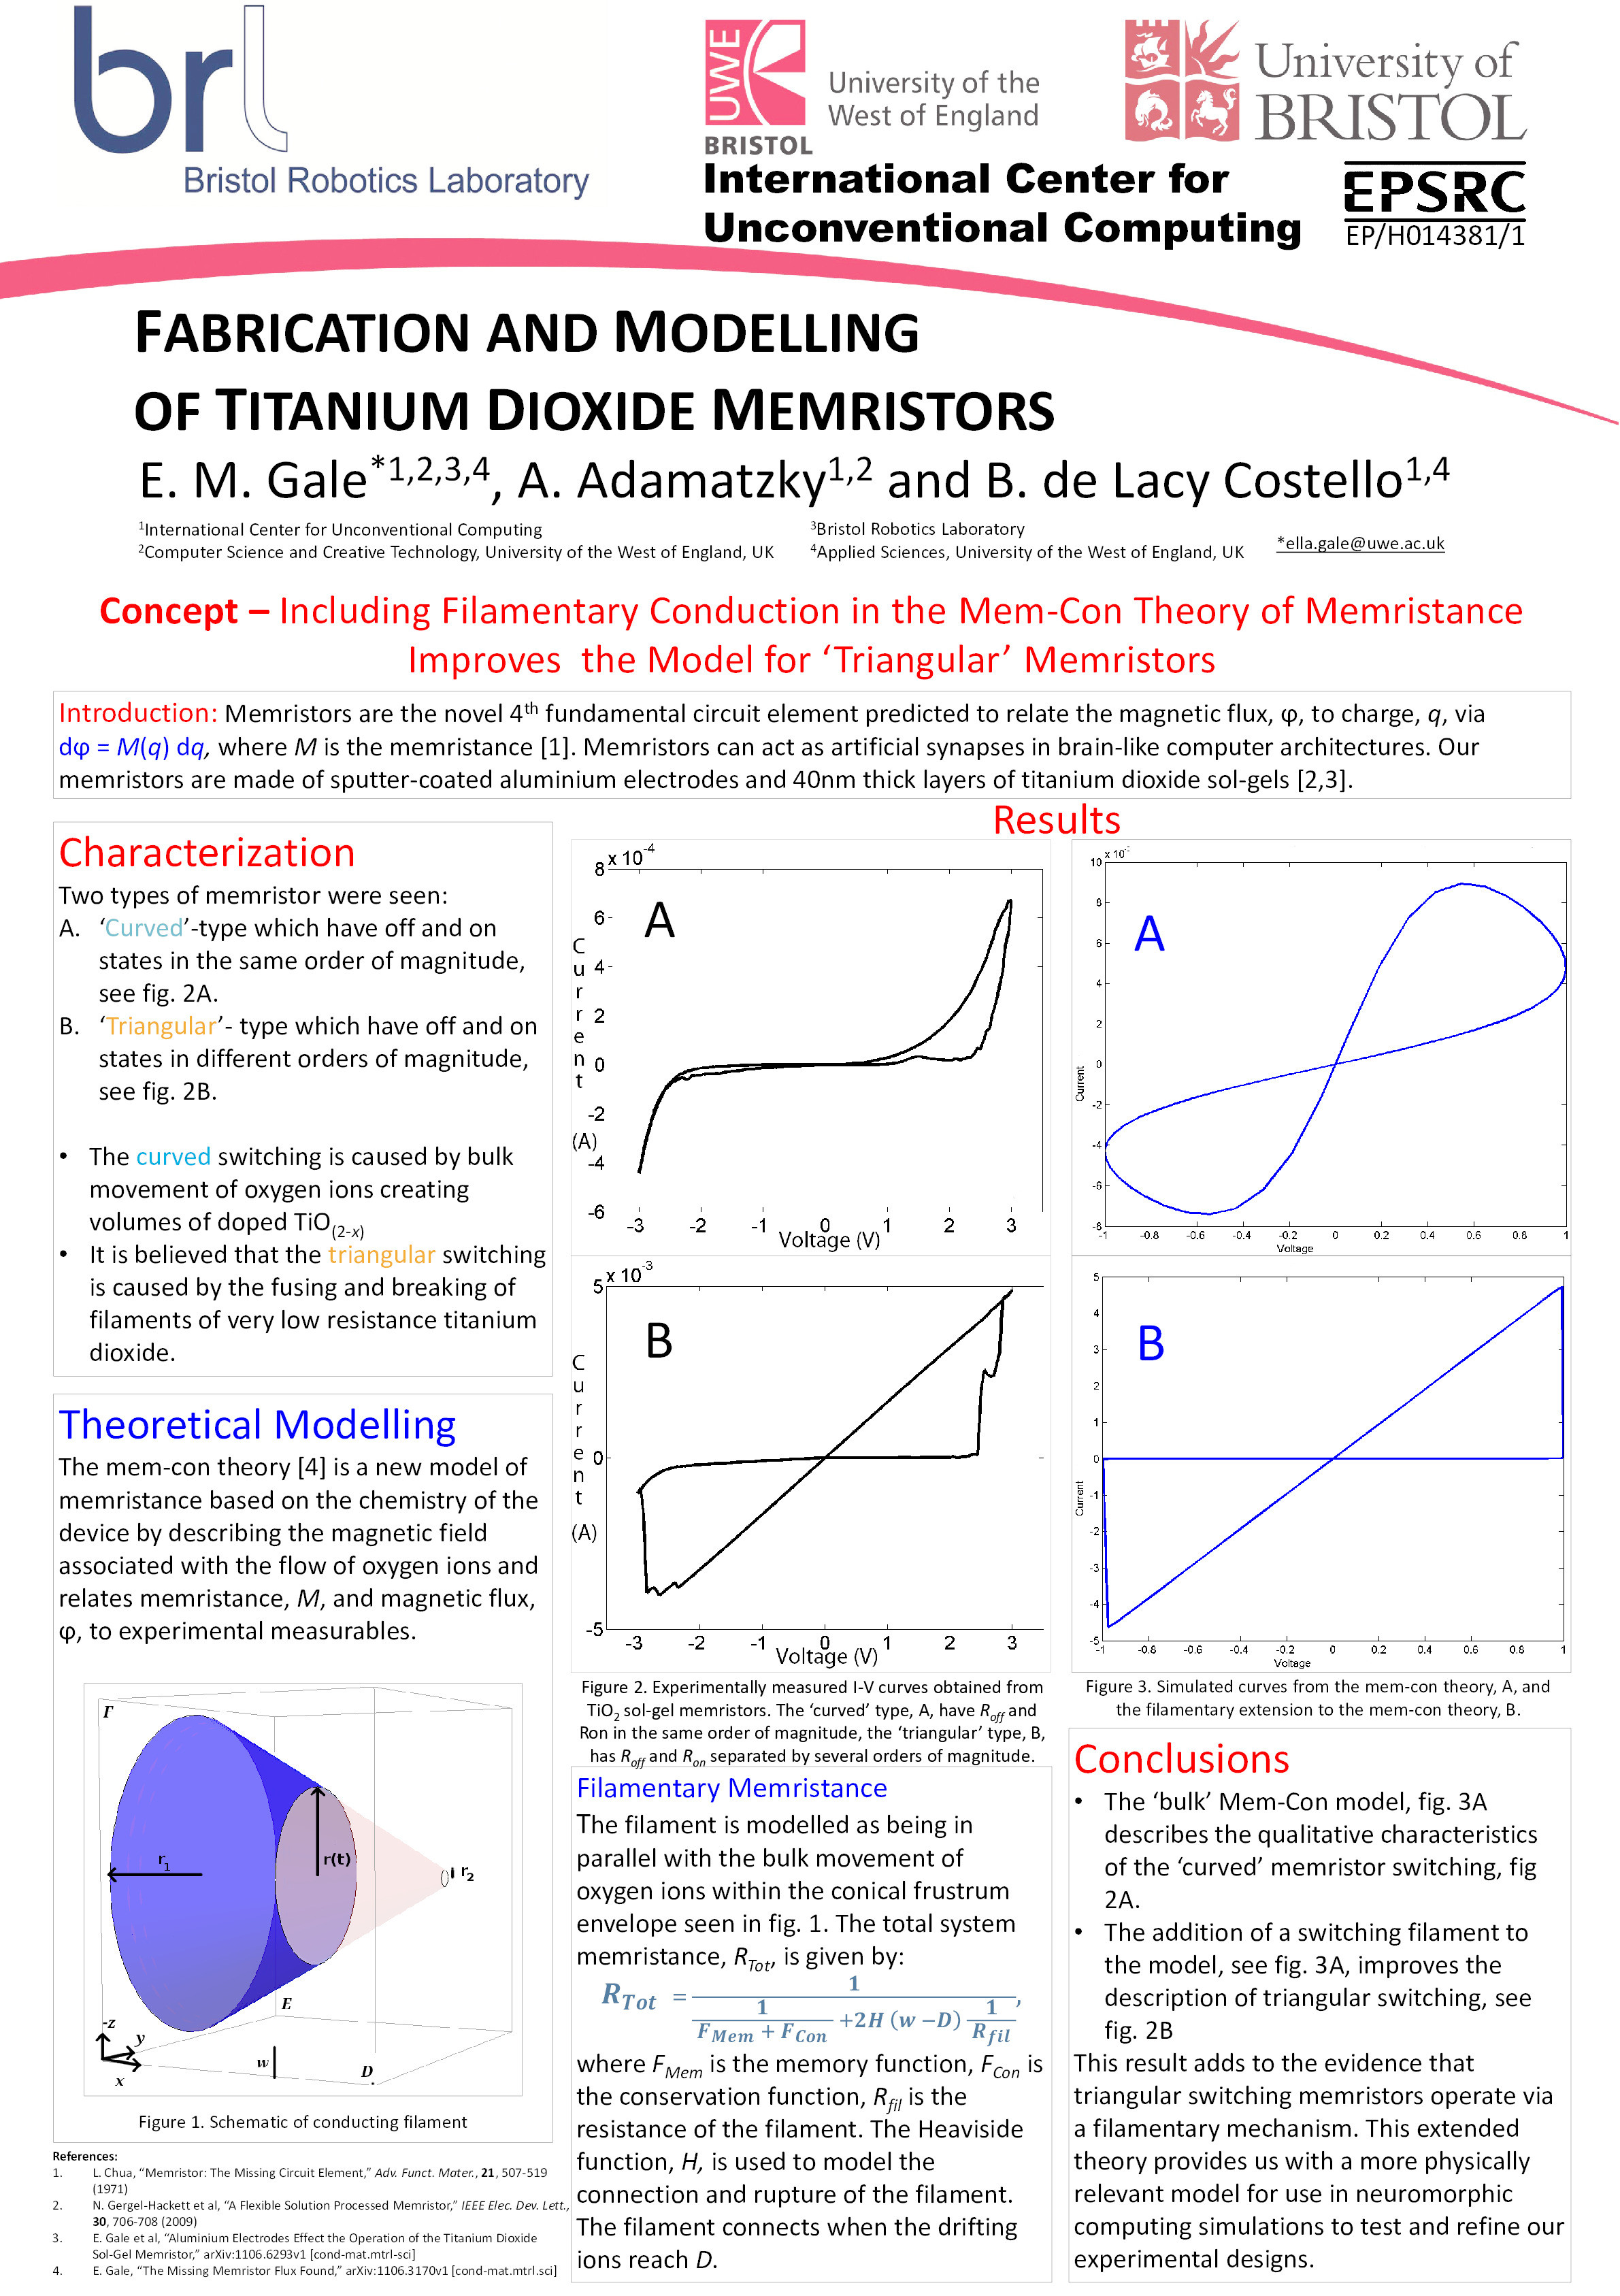 Fabrication and modelling of titanium dioxide memristors Thumbnail